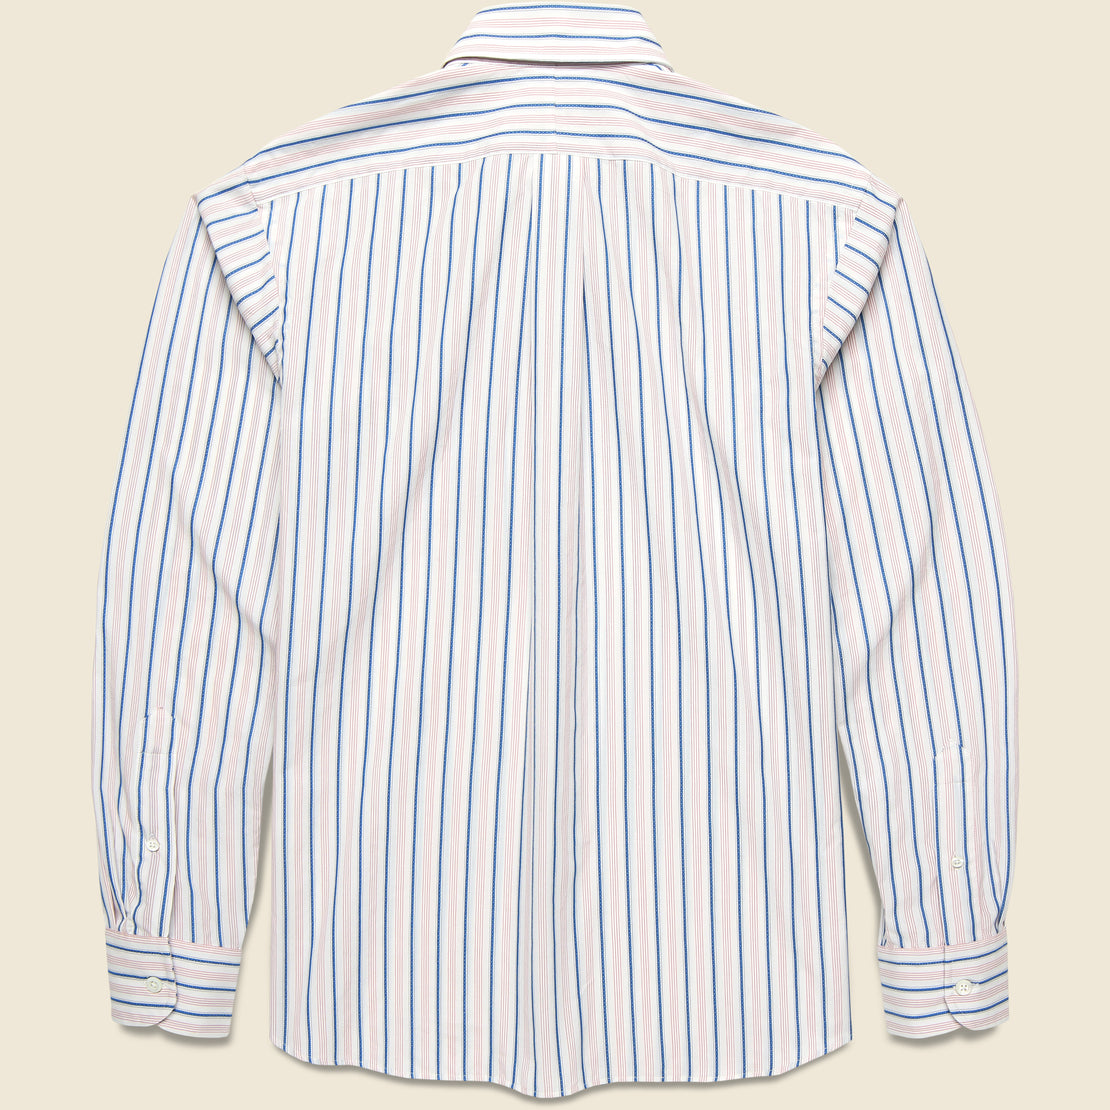 Textured Stripe Shirt - White/Cobalt/Dusty Rose - Hamilton Shirt Co. - STAG Provisions - Tops - L/S Woven - Stripe